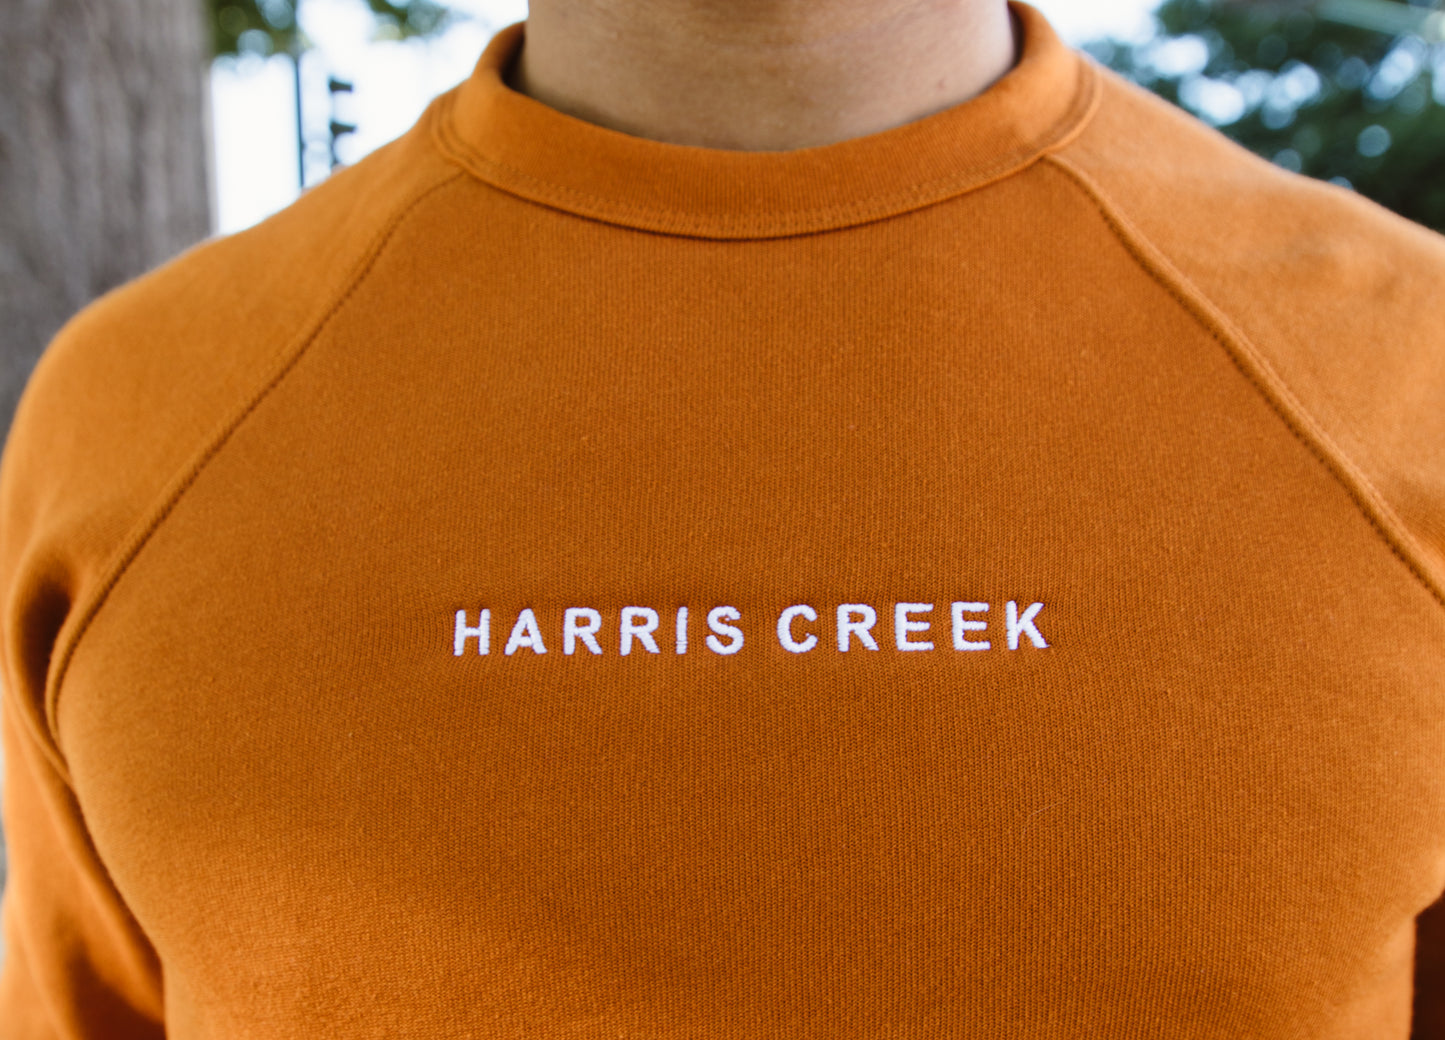 Harris Creek Embroidered Crewneck